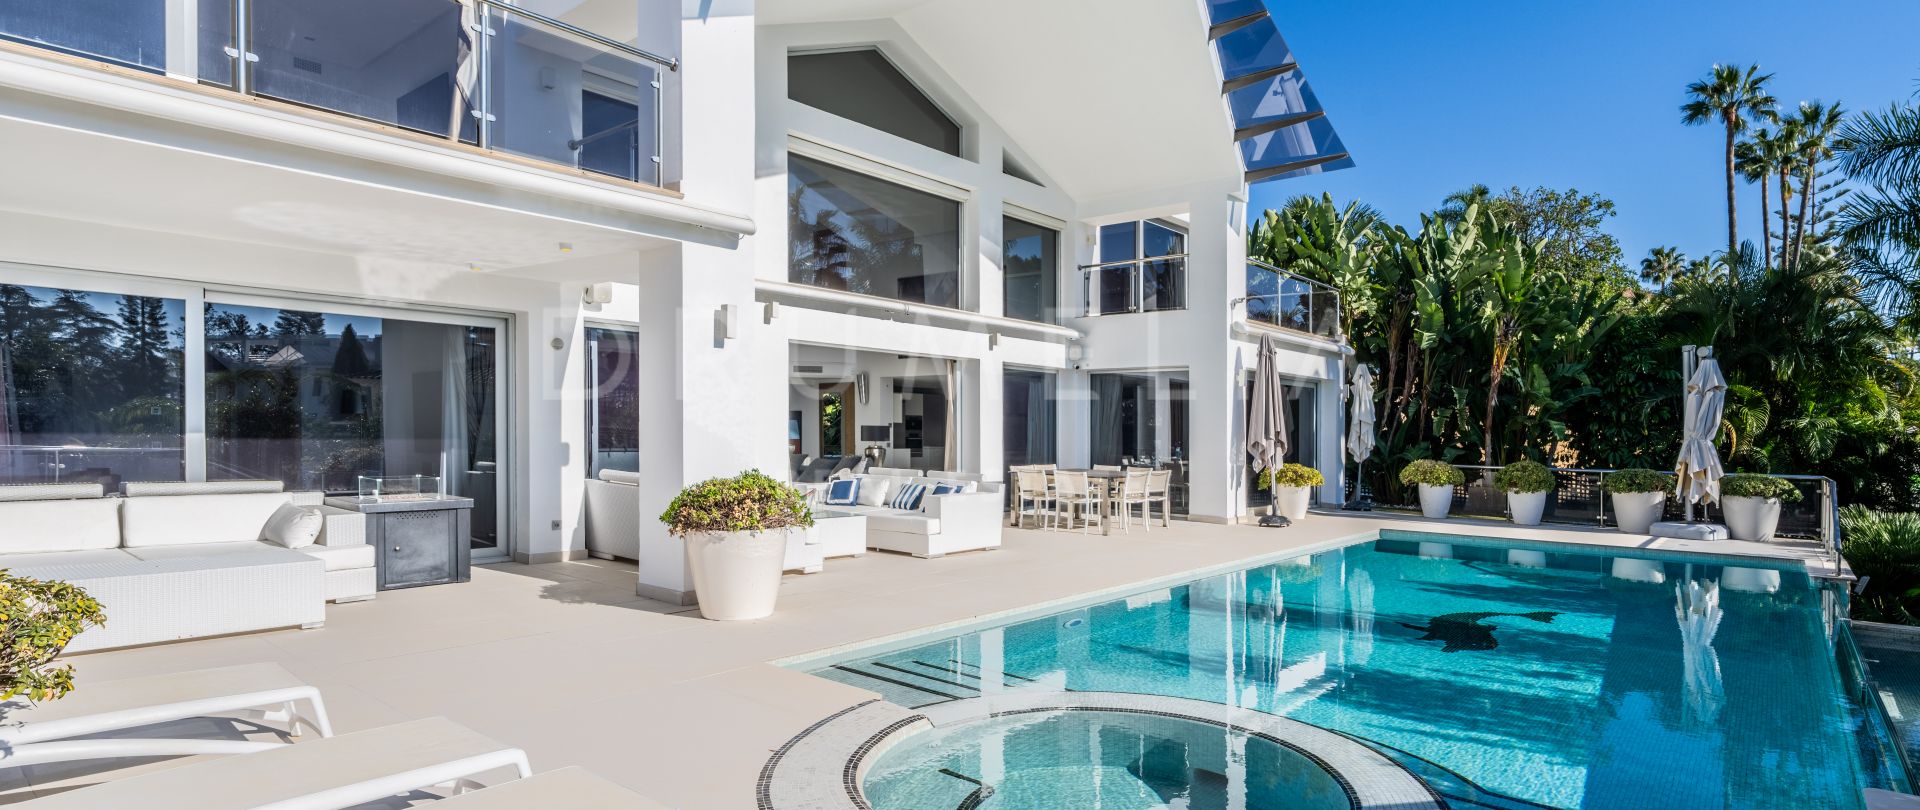 Stunning modern luxury villa in prestigious Los Naranjos Golf Club, Nueva Andalucia, Marbella